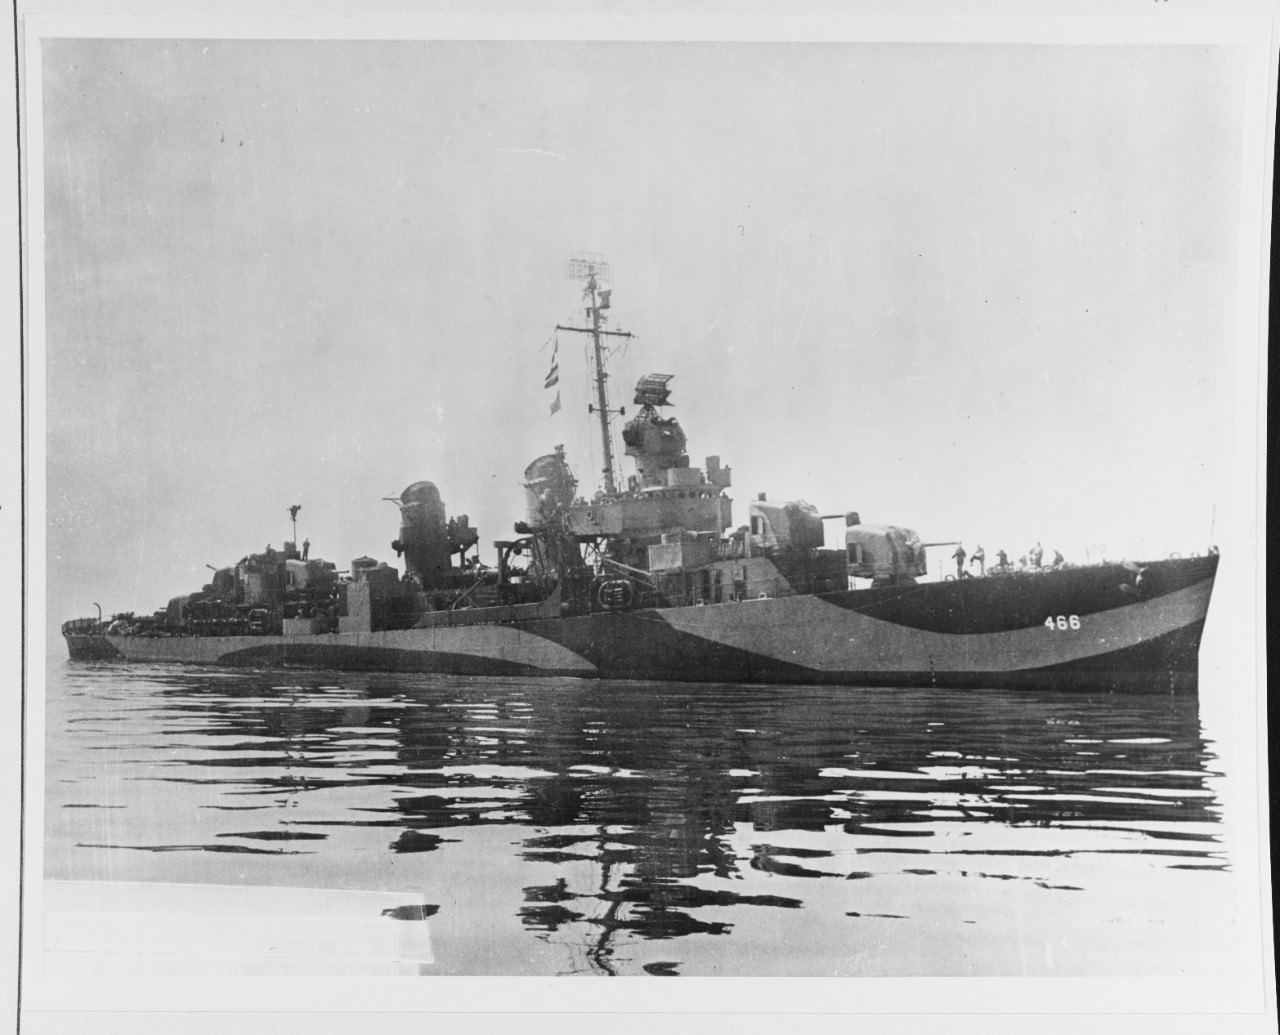 USS WALLER (DD-466)